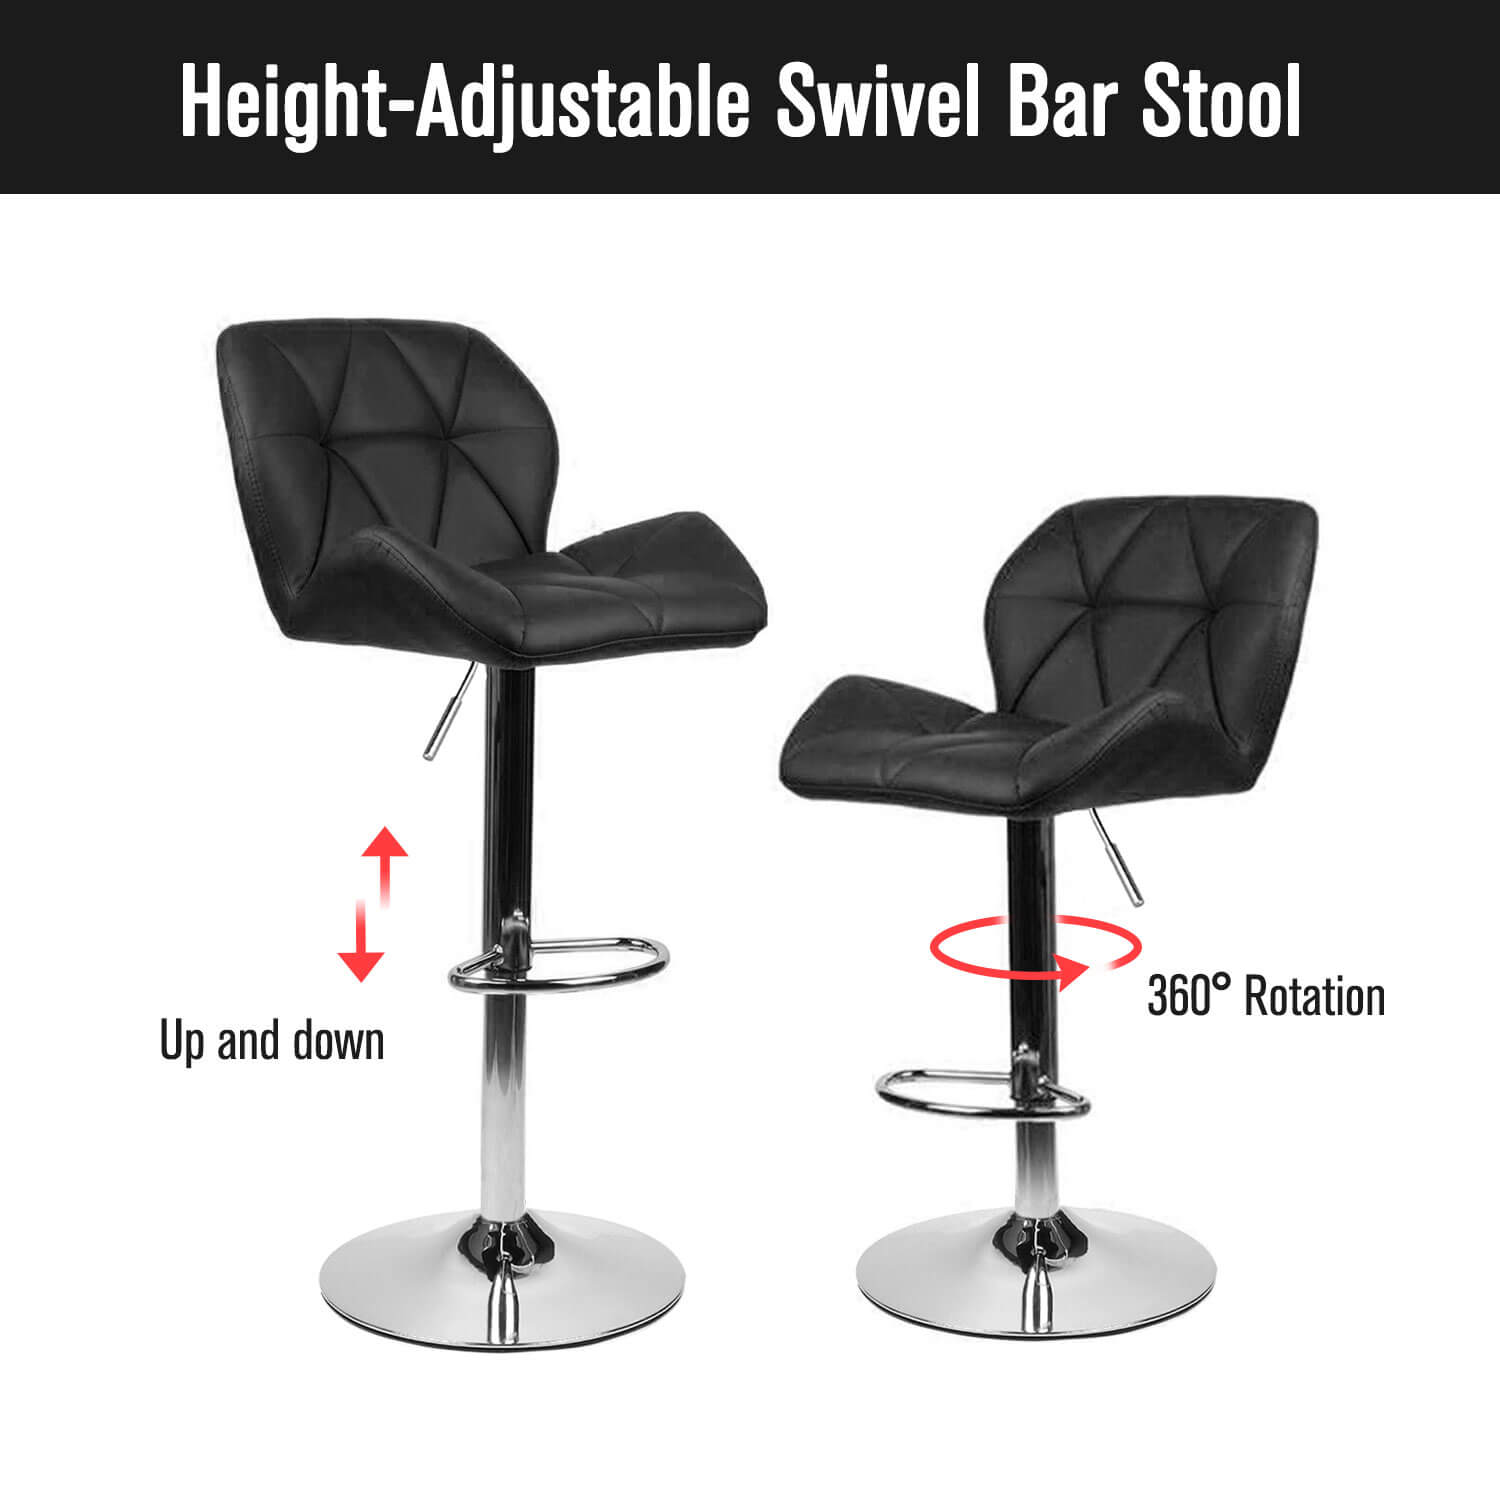 Elecwish black bar stool is a height-adjustable swivel stool